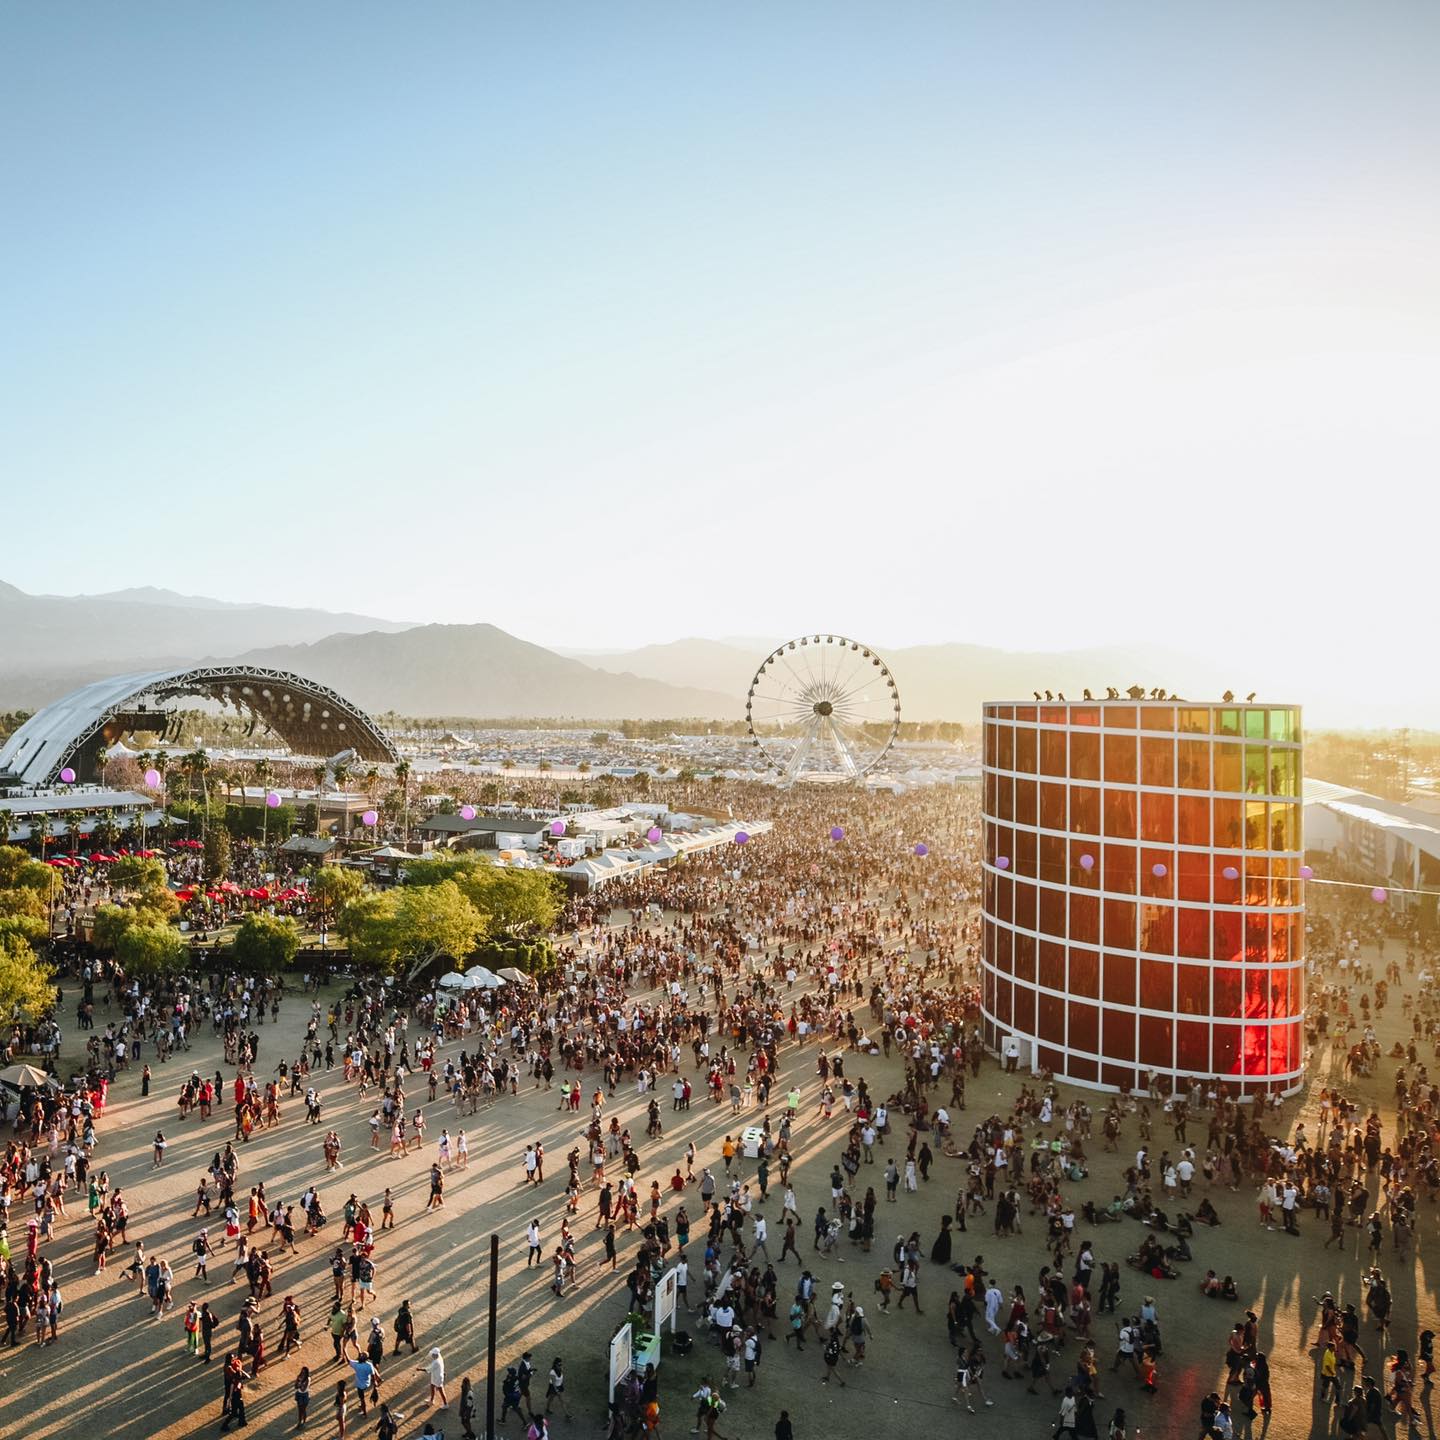 Just announced: Coachella 2023